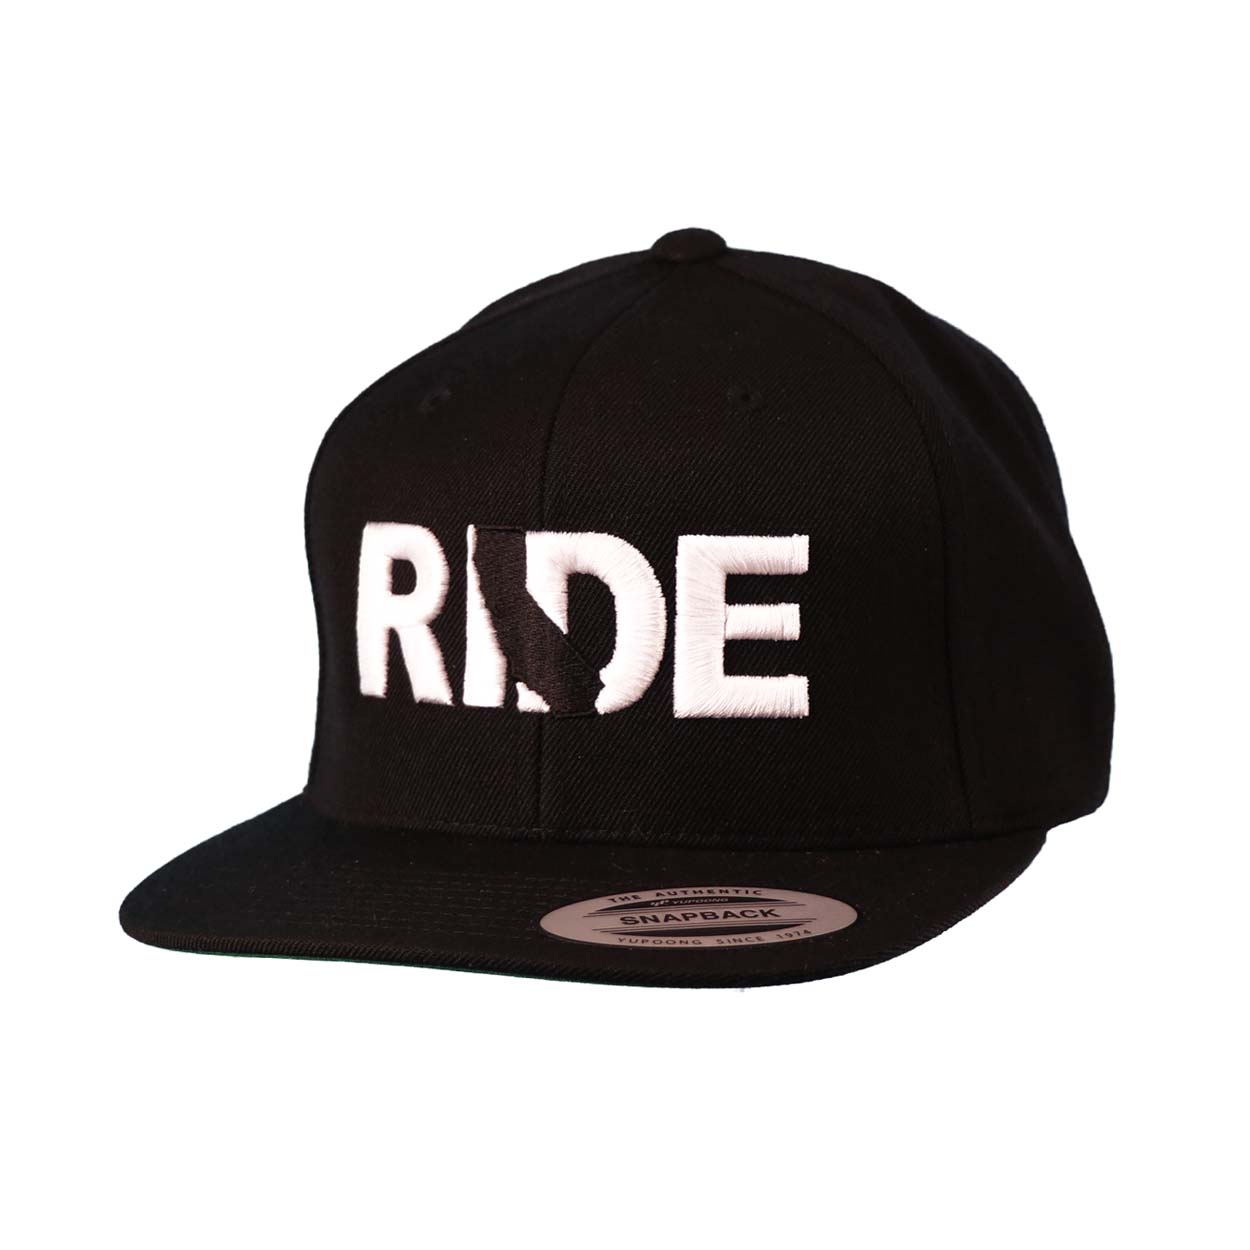 Ride California Classic Embroidered Snapback Flat Brim Hat Black/White